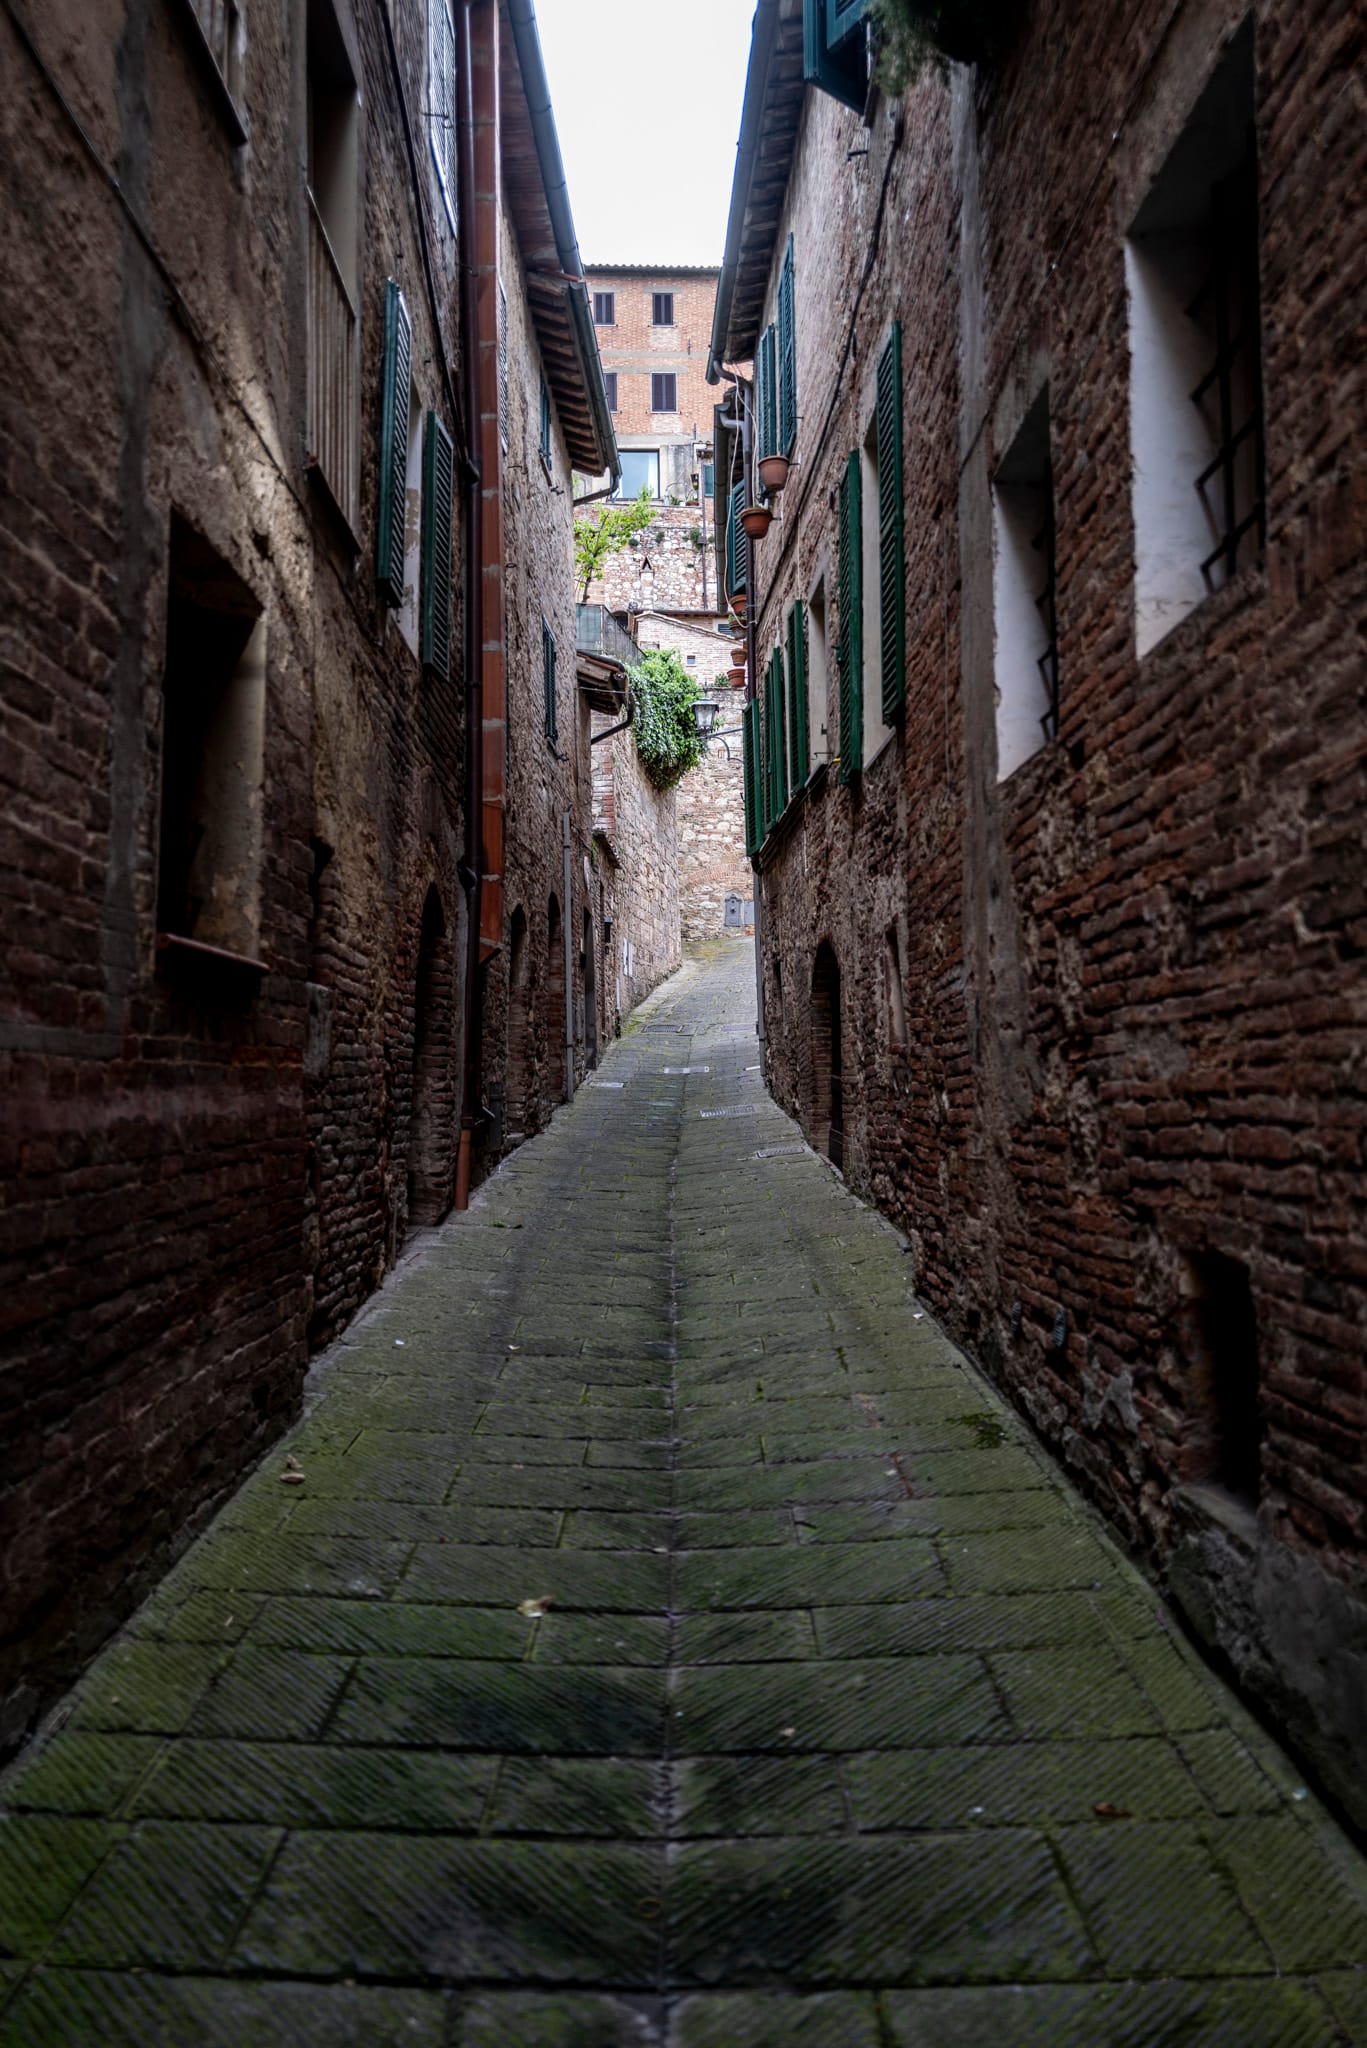 ApartHotel Anghel, Siena, Italy